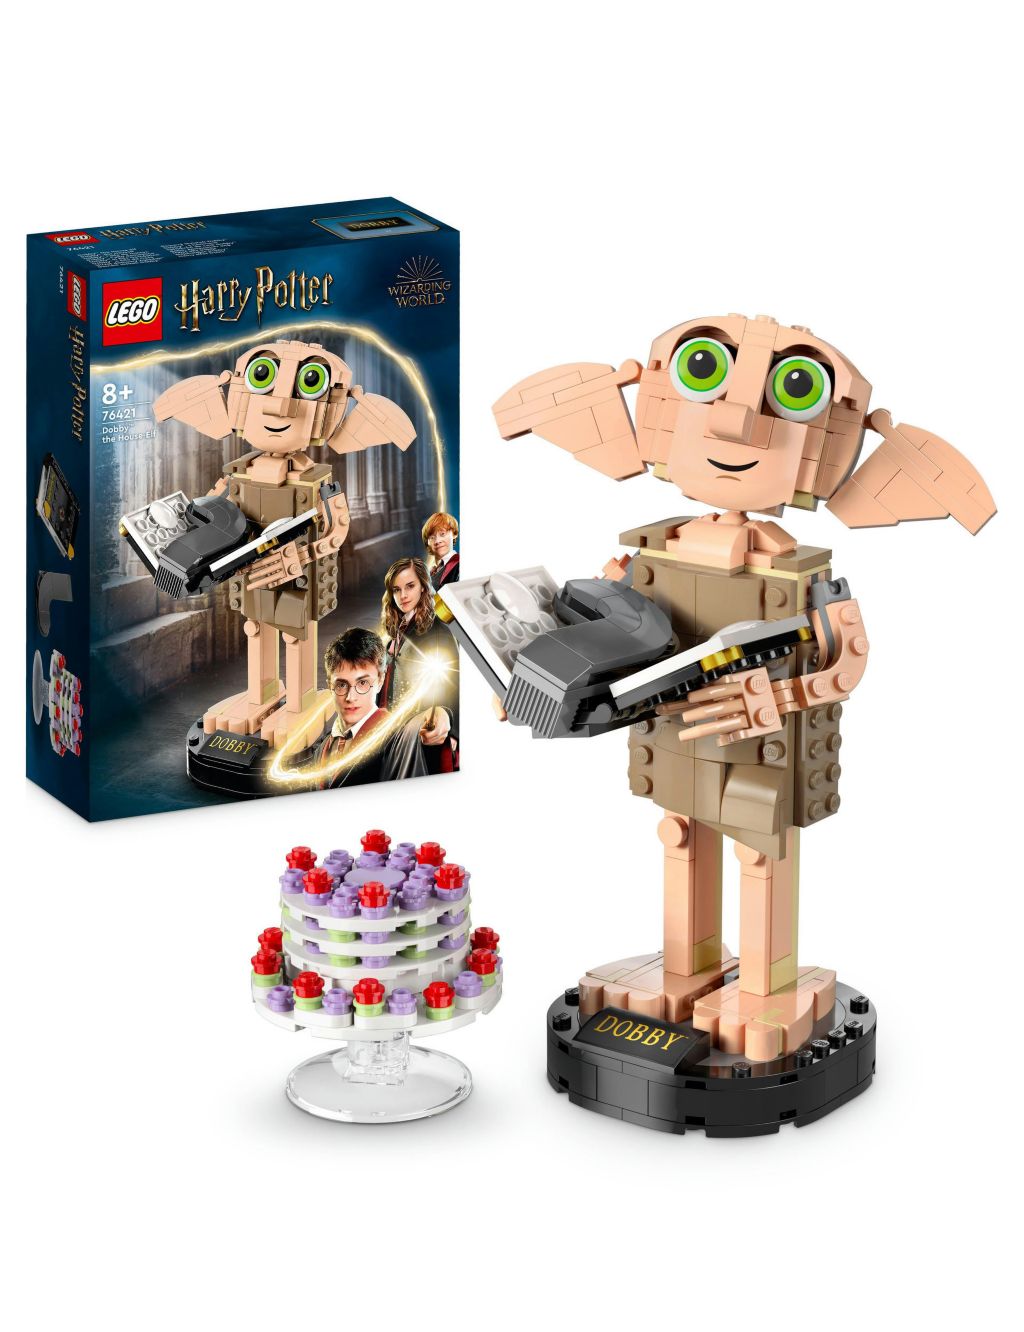 LEGO Harry Potter Dobby the House-Elf Figure (8+ Yrs)